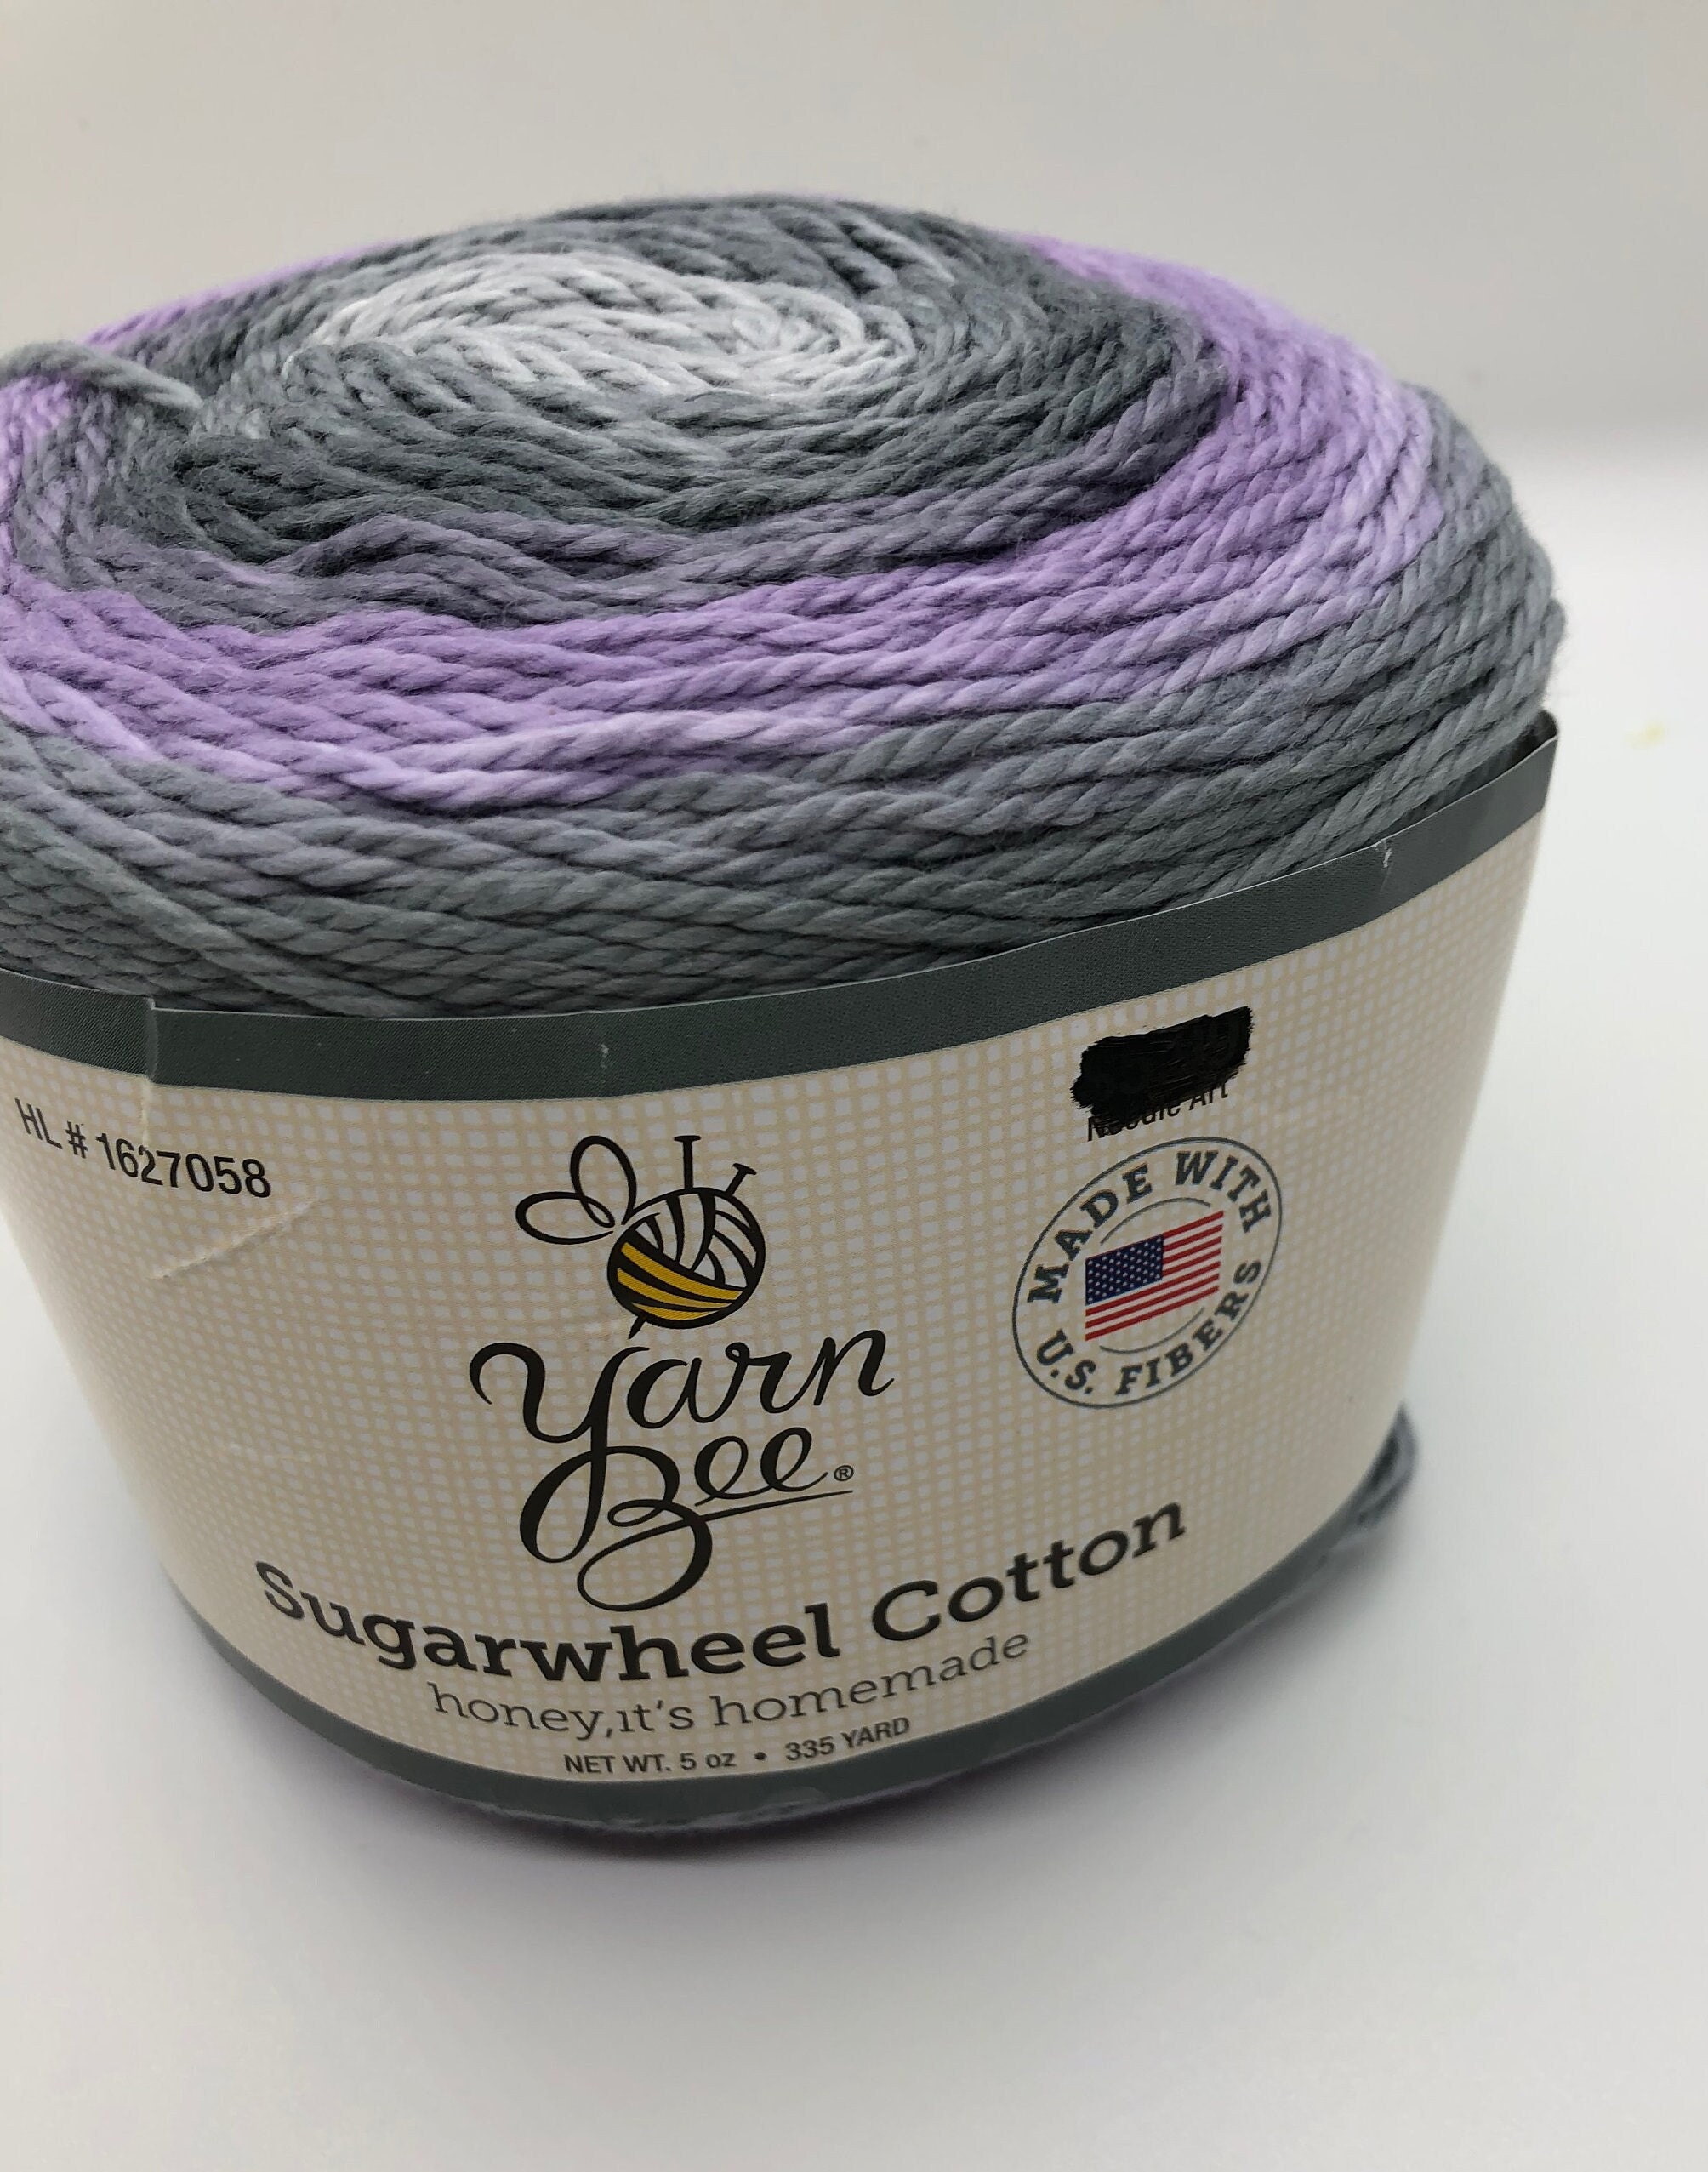 Yarn Bee Sugarwheel Cotton